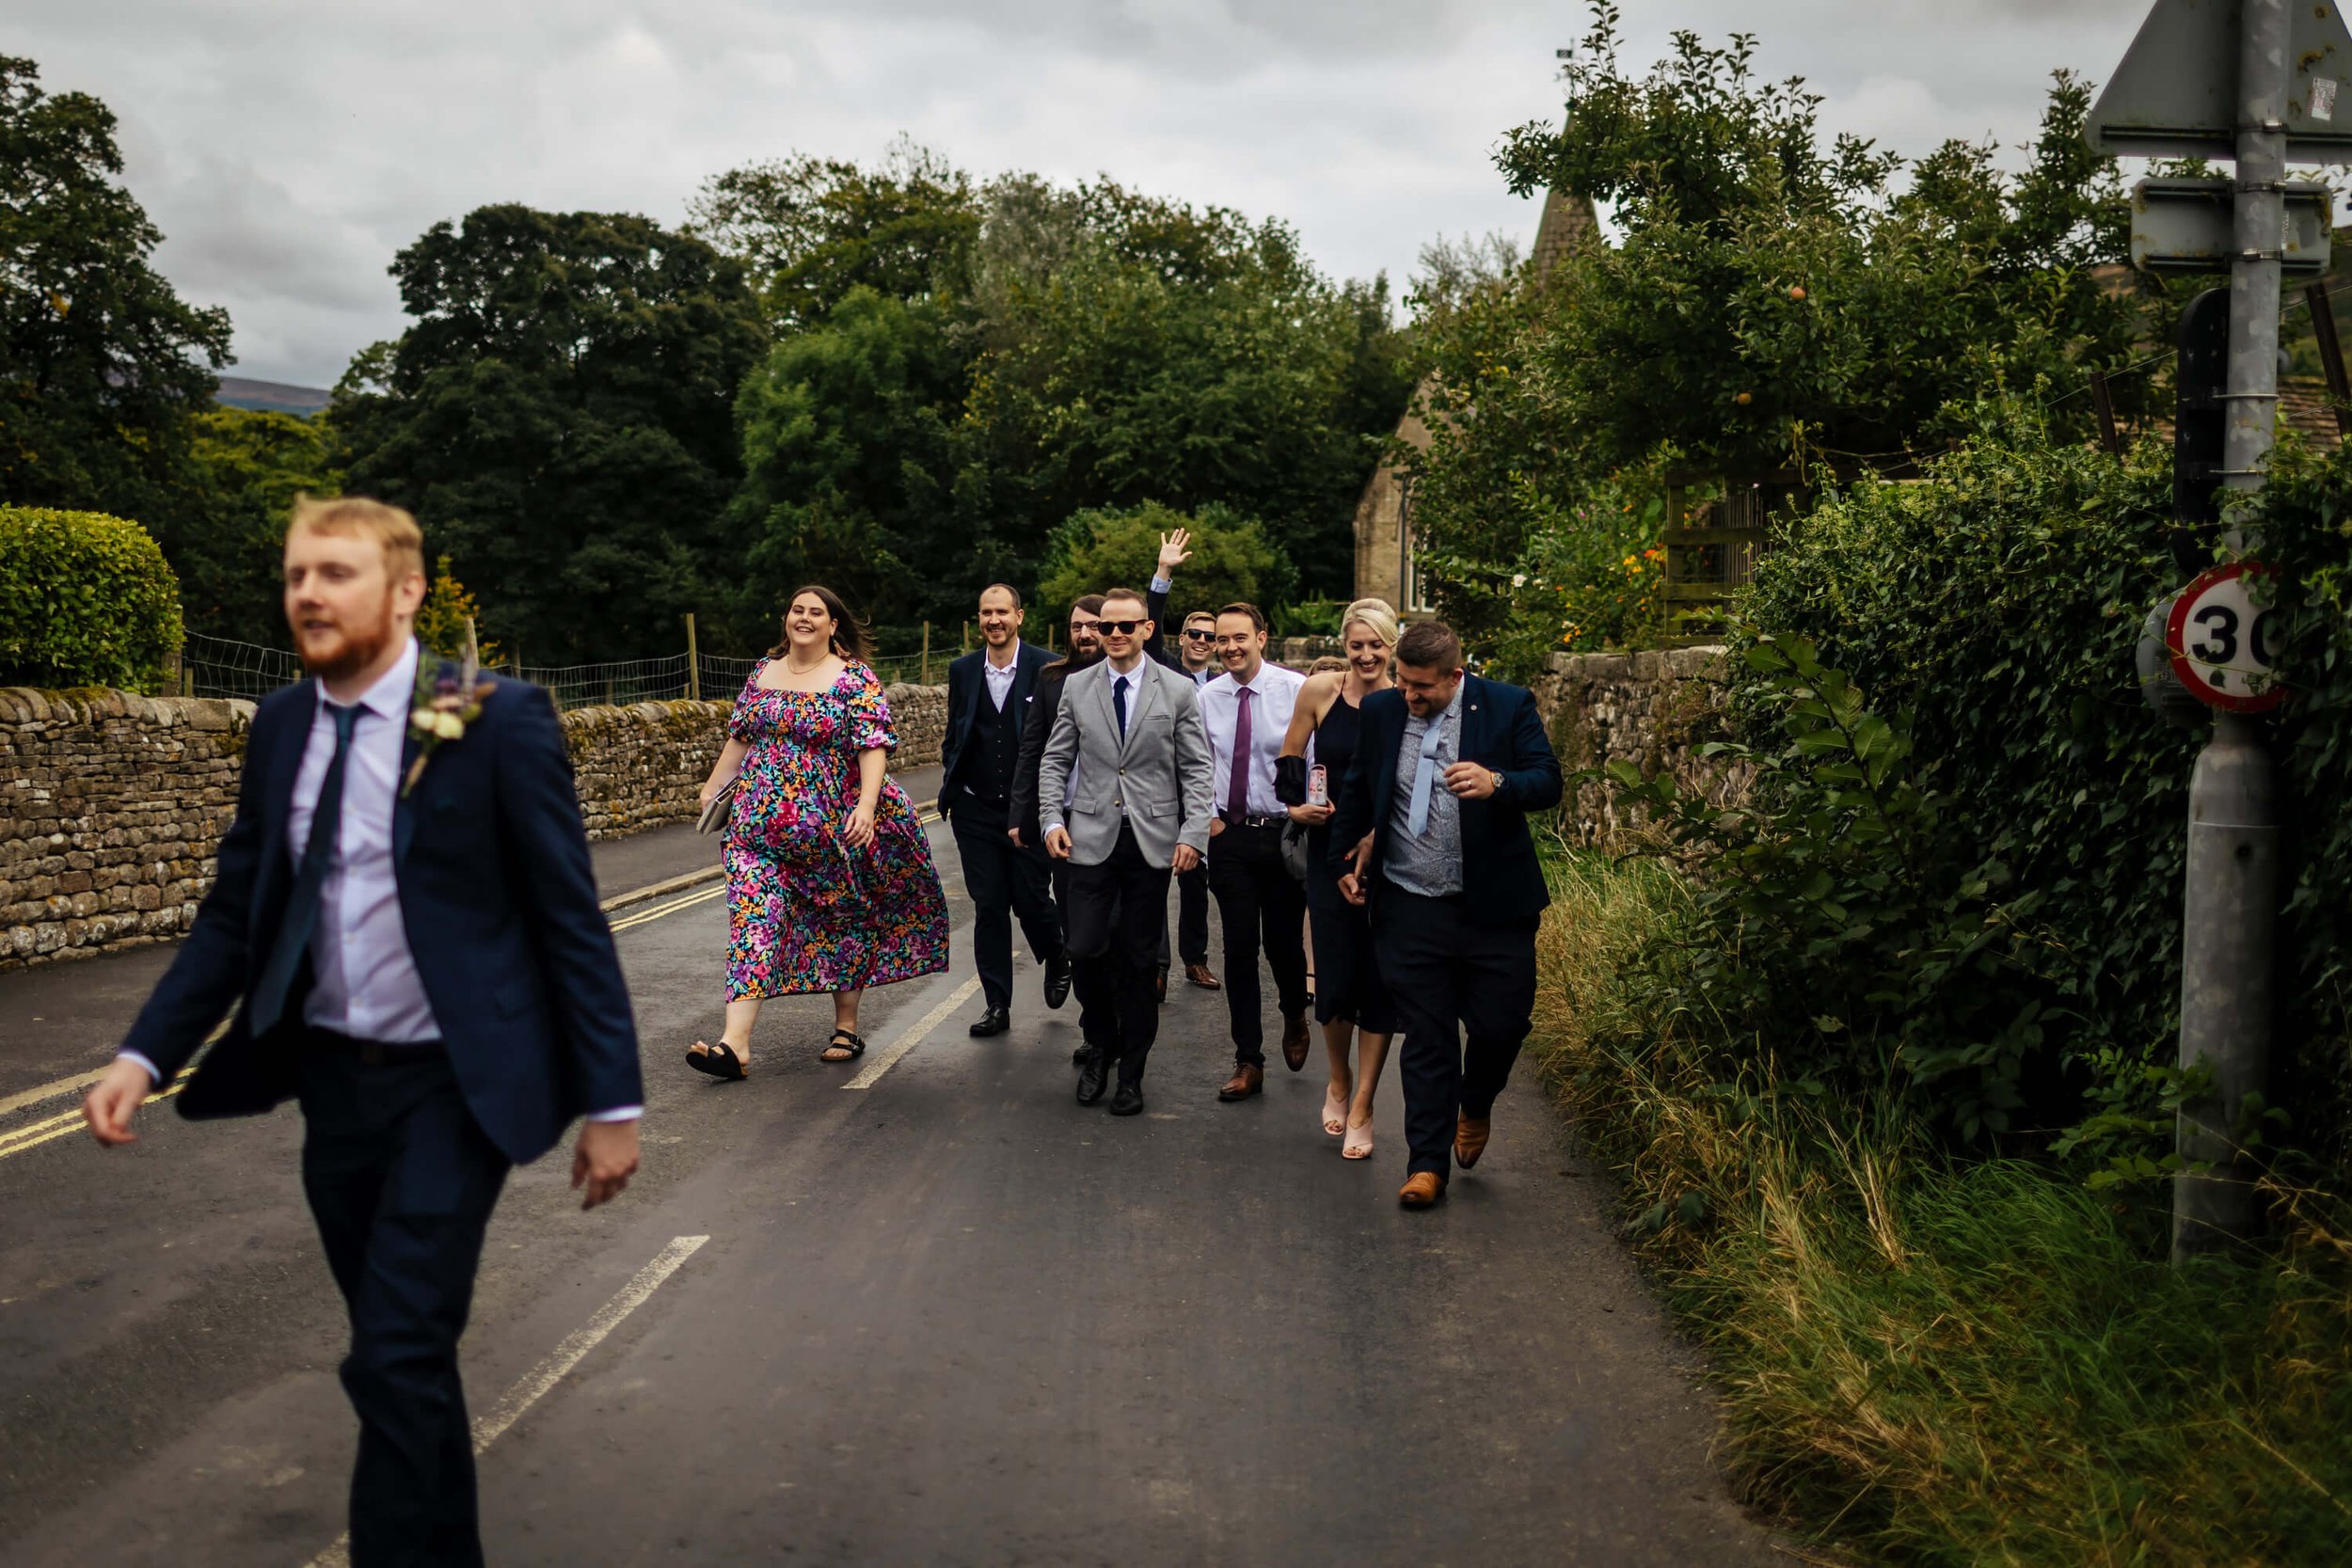 Wedding guests walking through Burnsall streets